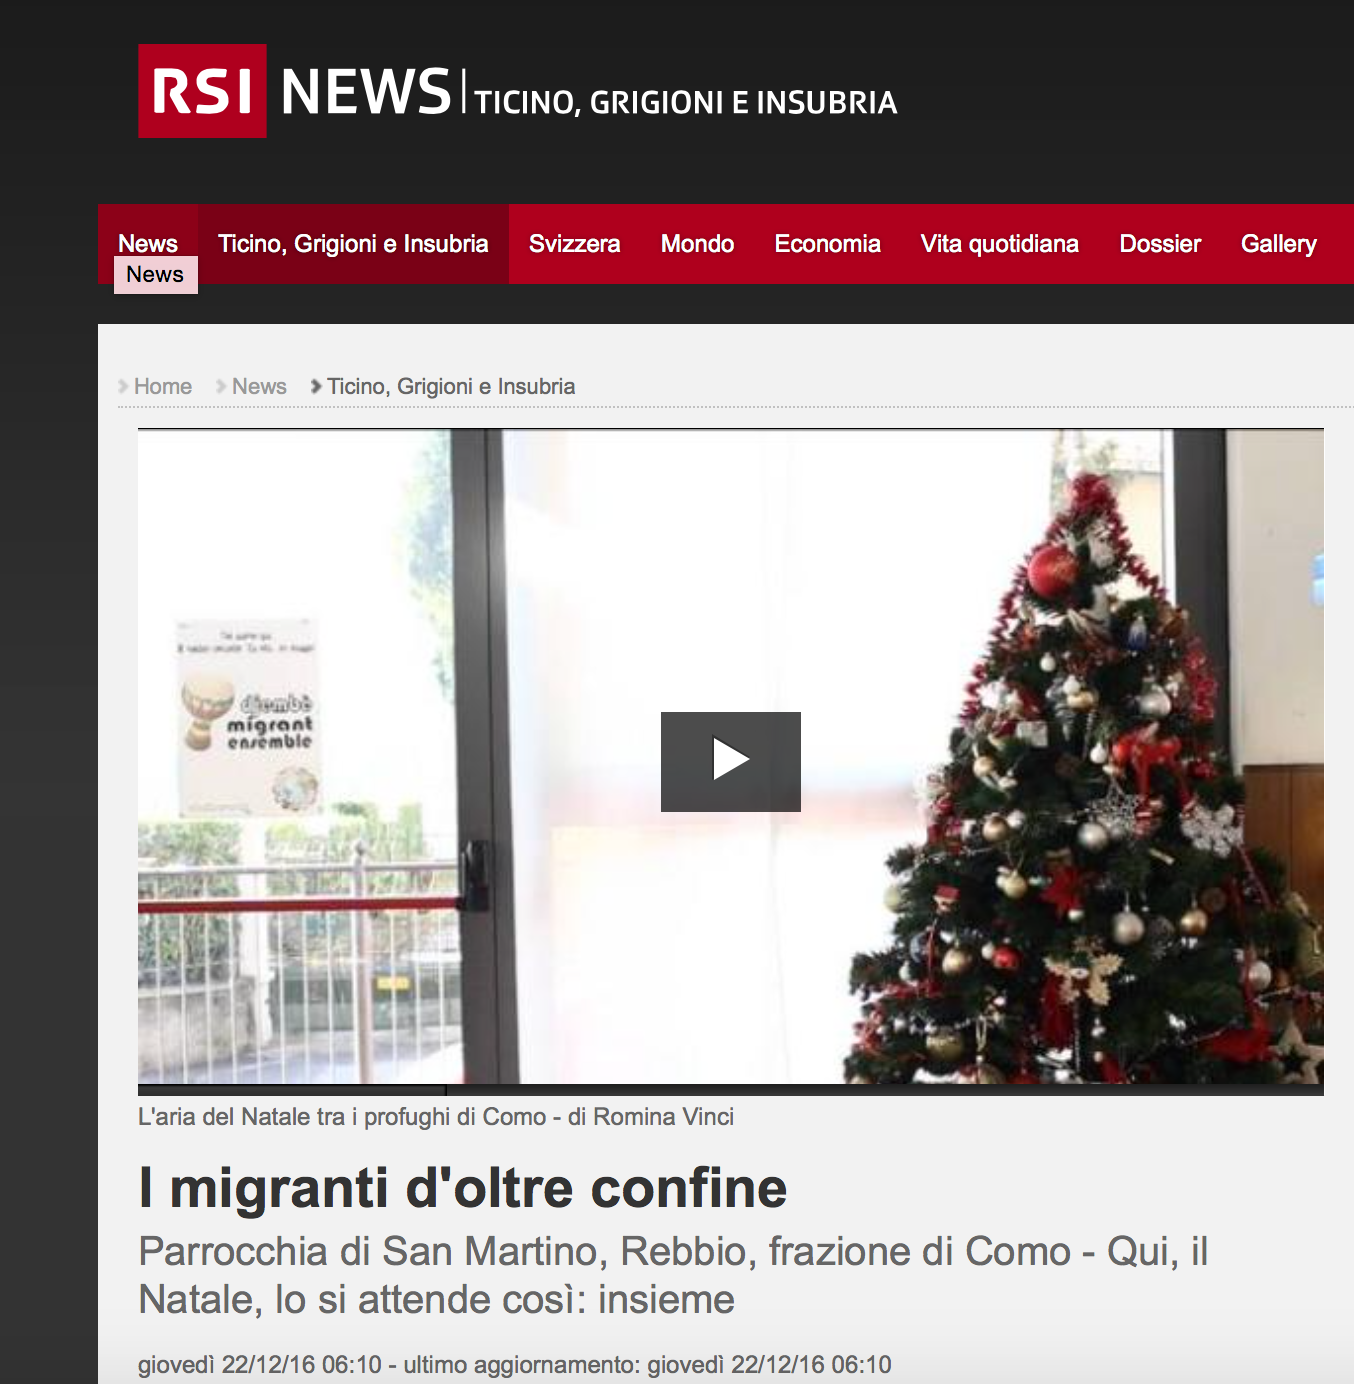 RSI - Radio Televisione Svizzera - December 2016